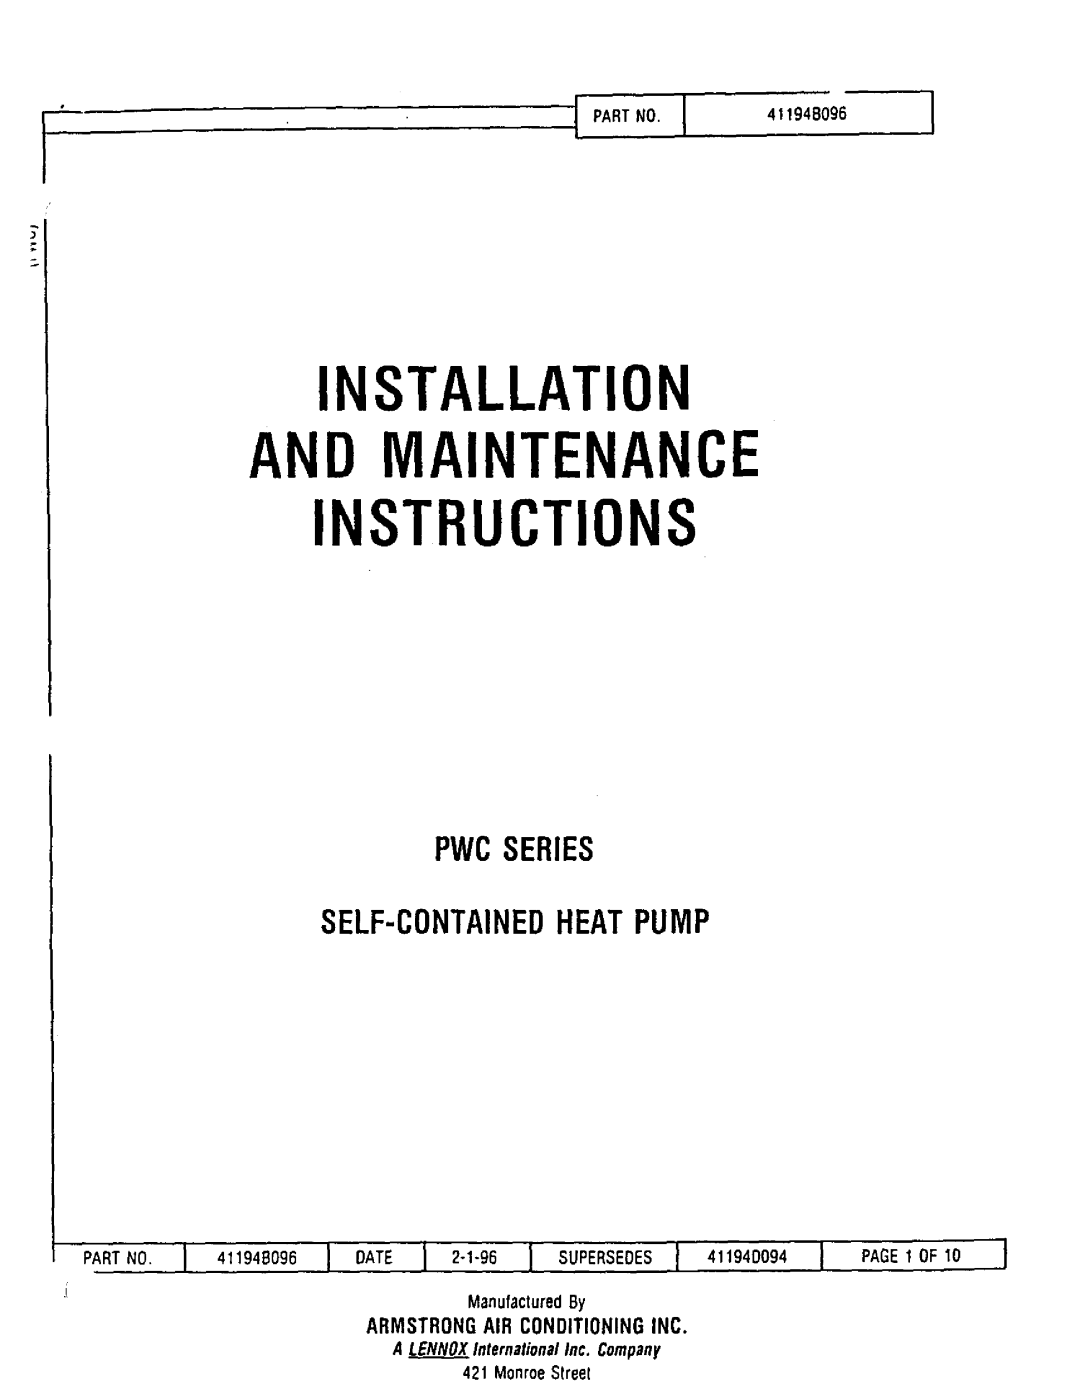 Lennox International Inc PWC18E14.7 Pwcseries Self-Containedheatpump, Installation And Maintenance Instructions, I A It 